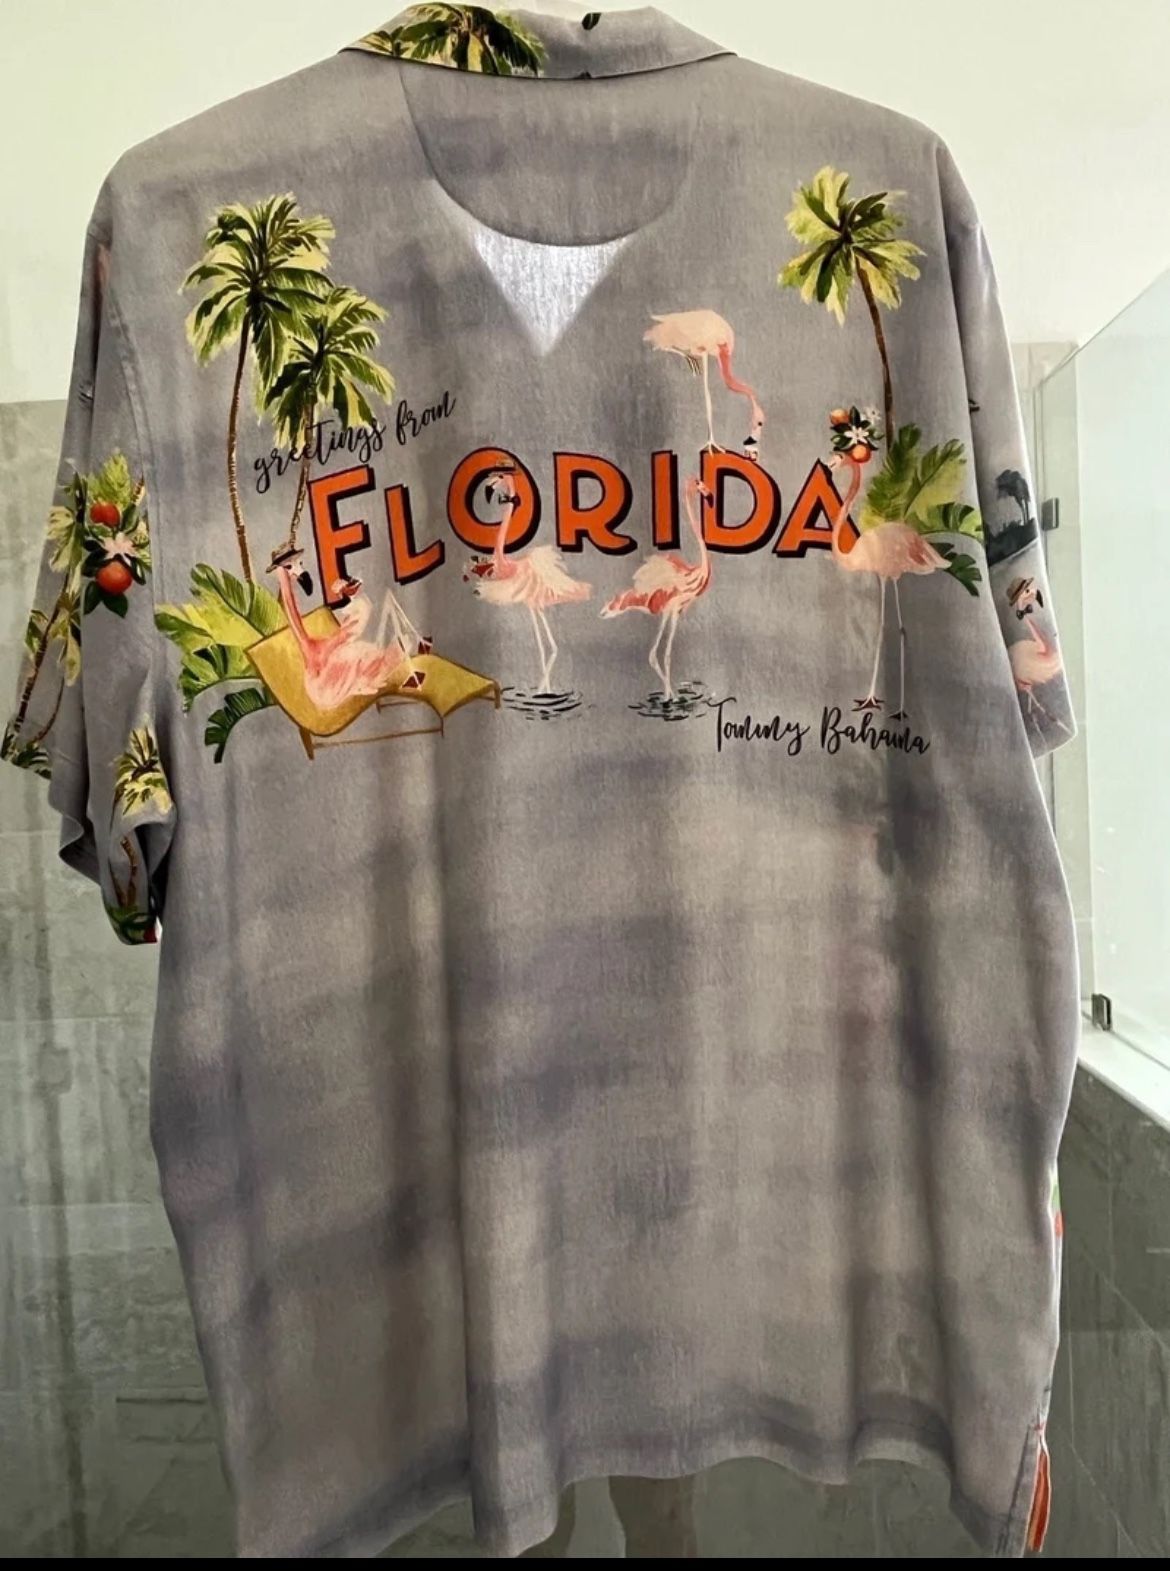 Tommy Bahama Shirt